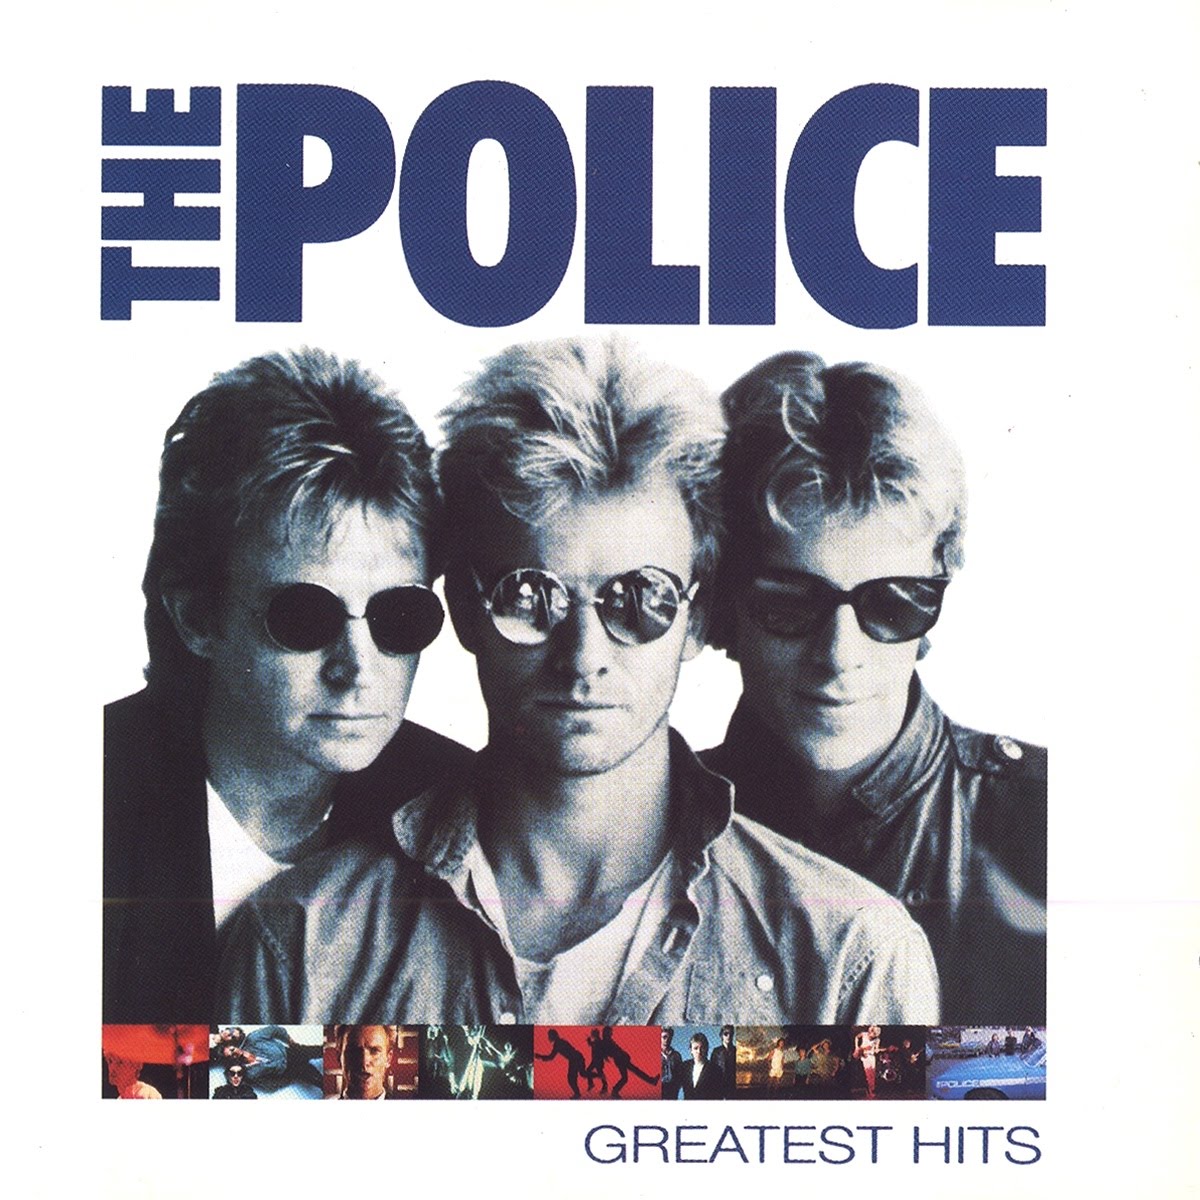 1992 Greatest Hits - The Police - Rockronología